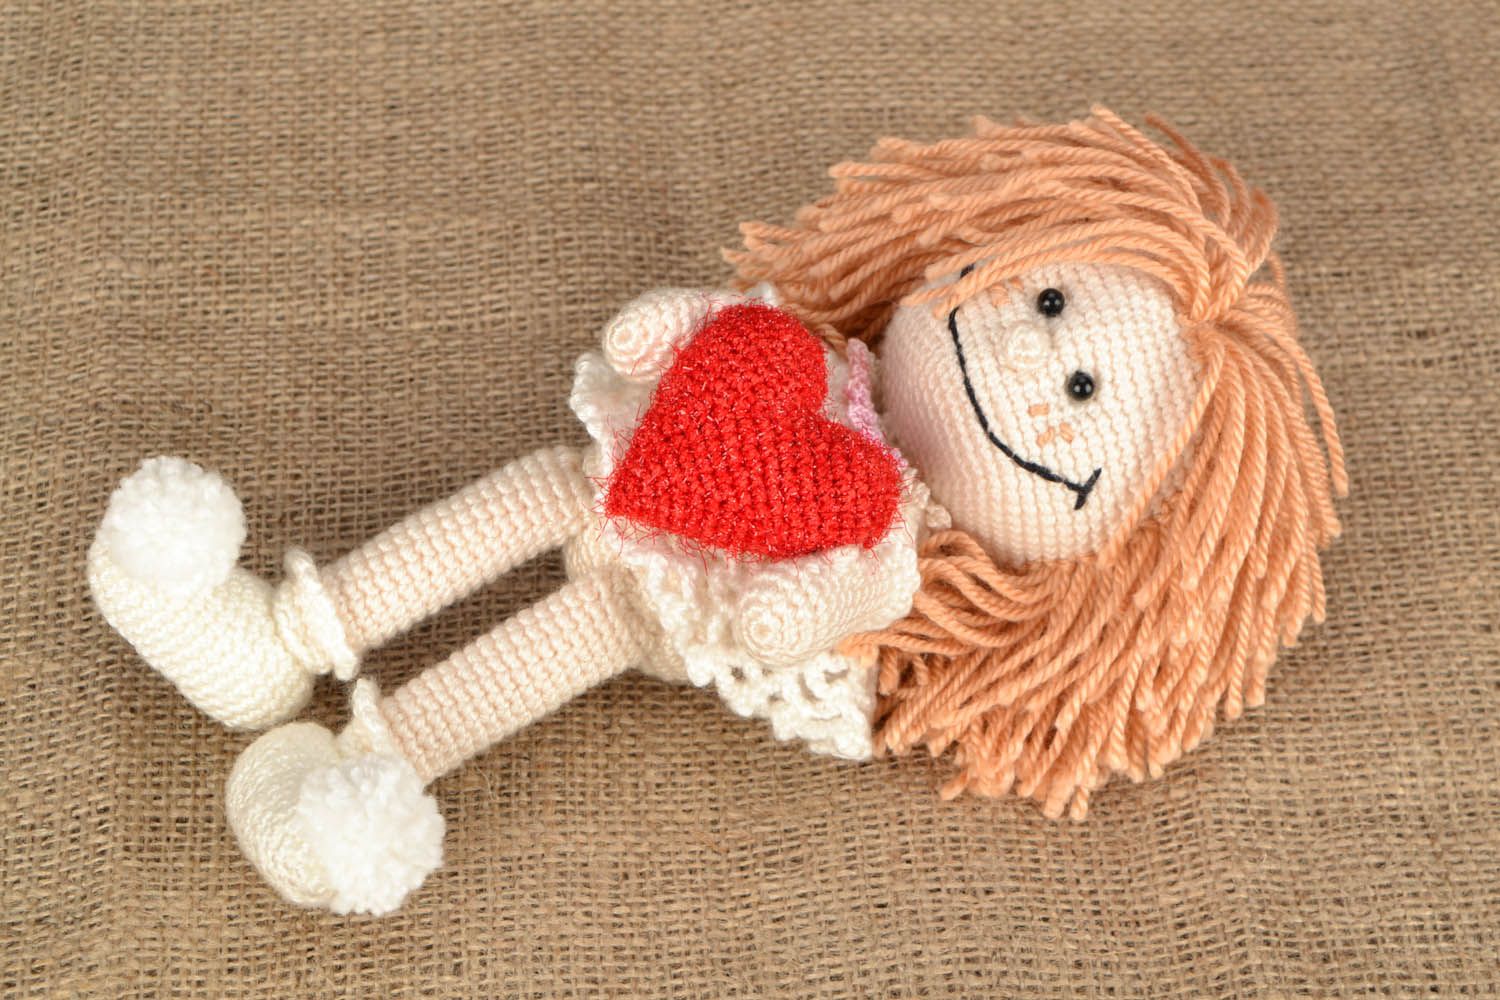 Soft crocheted doll photo 1